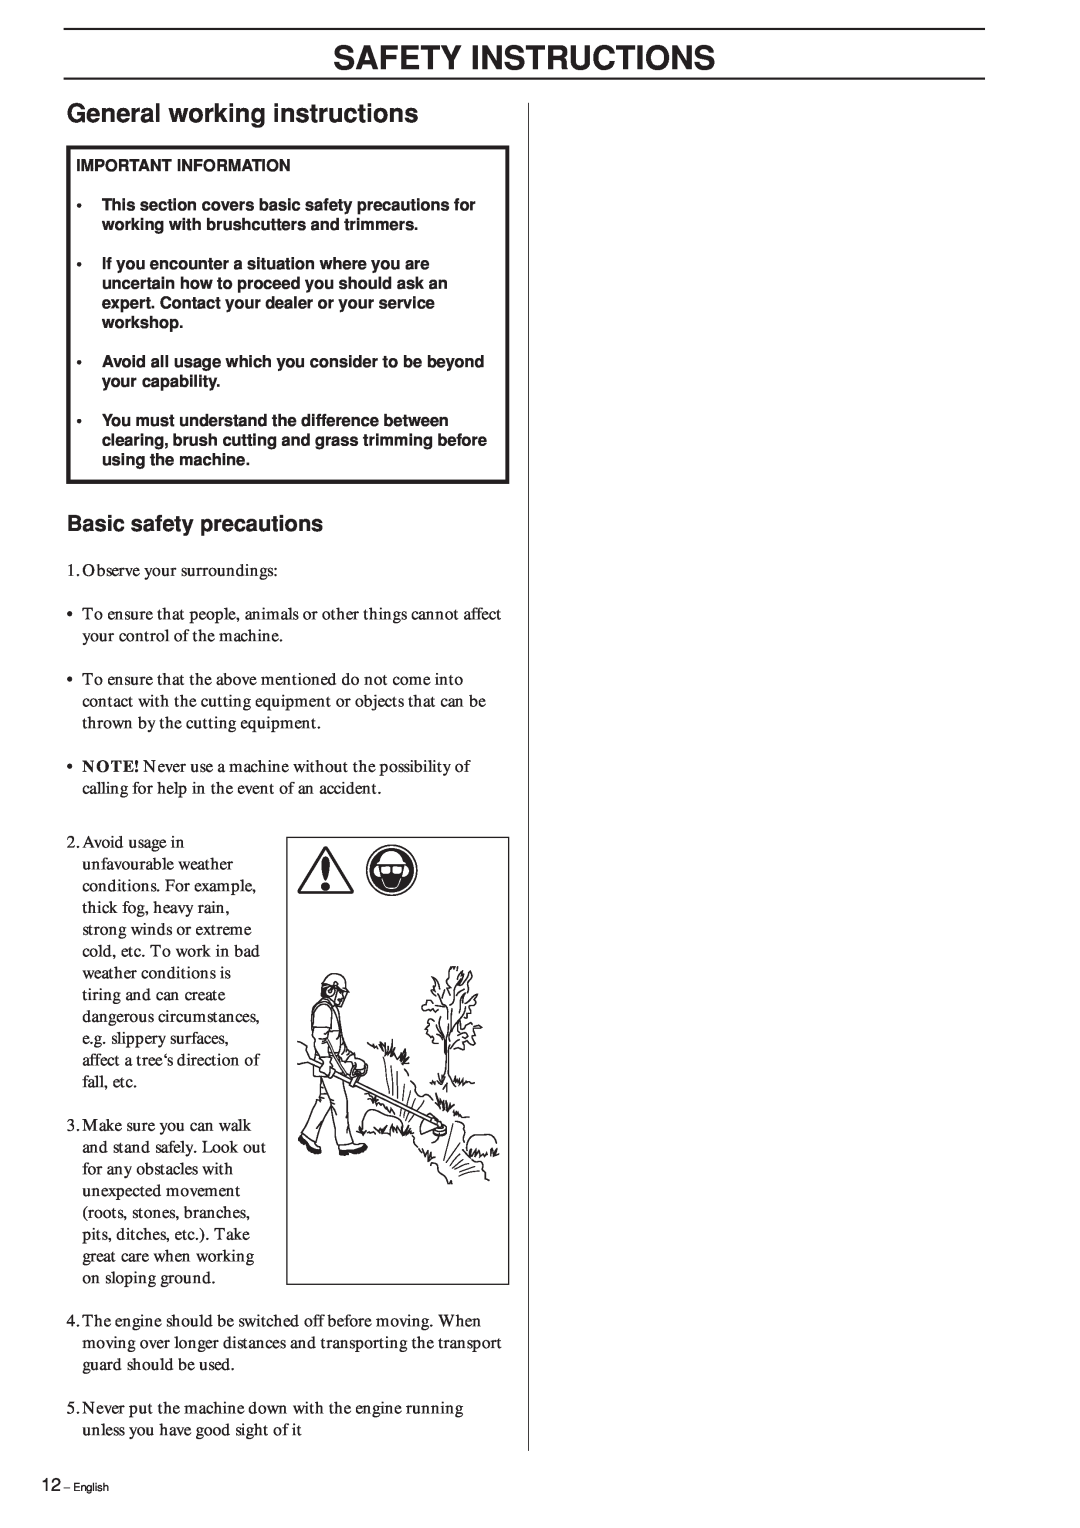 Jonsered GR 2126D manual General working instructions, Safety Instructions, Basic safety precautions 